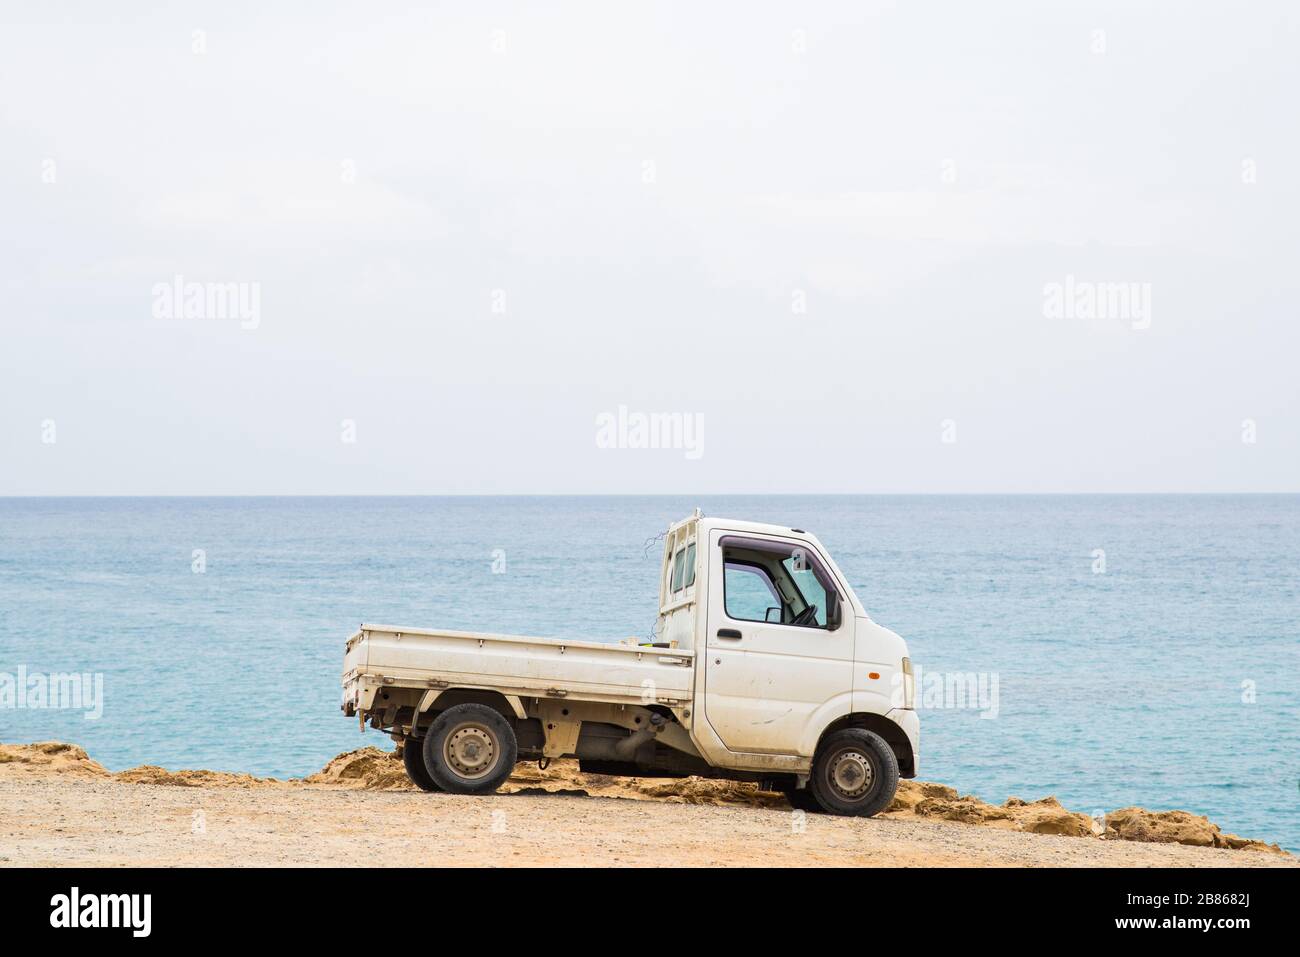 Protaras. Cyprus - October 9, 2018: White Truck in Protaras on Cyprus. Sea on Background. Stock Photo